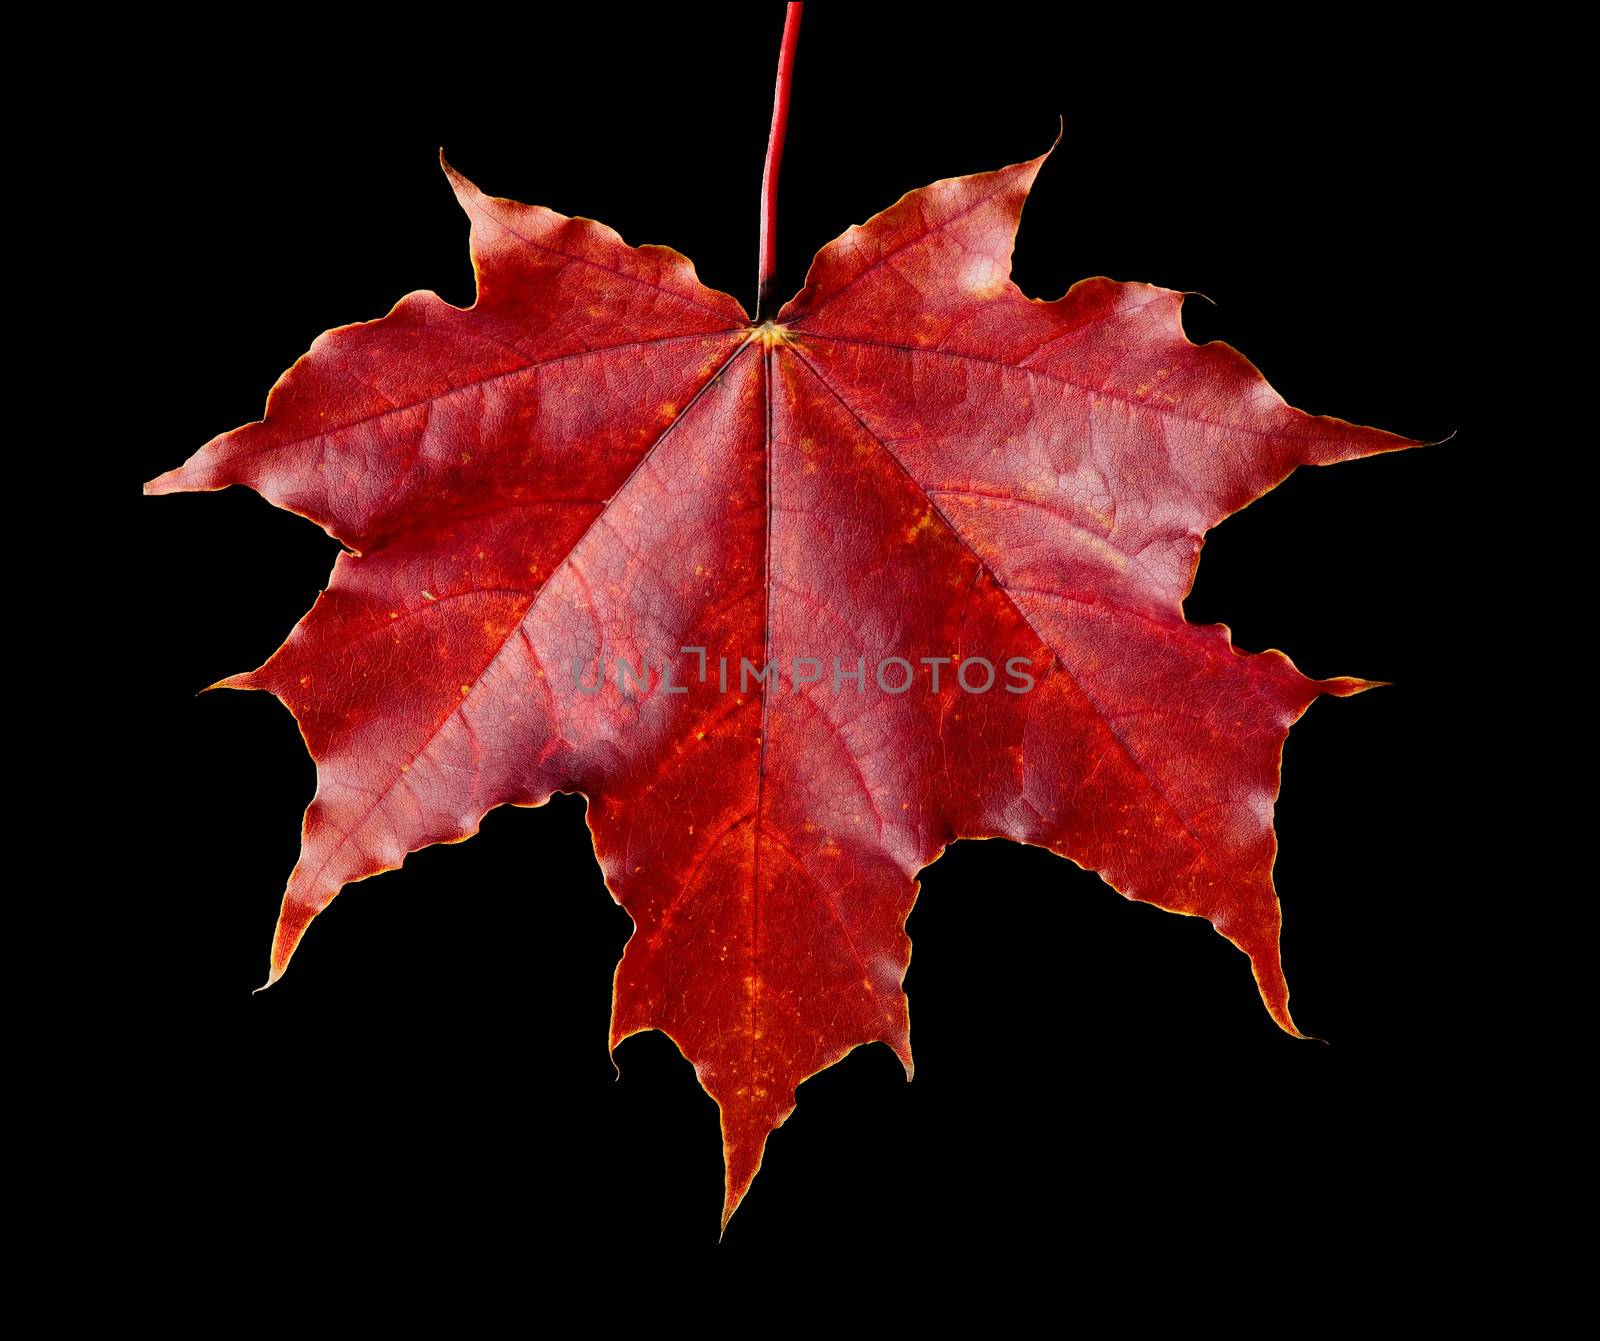 Red maple leaf by fotooxotnik